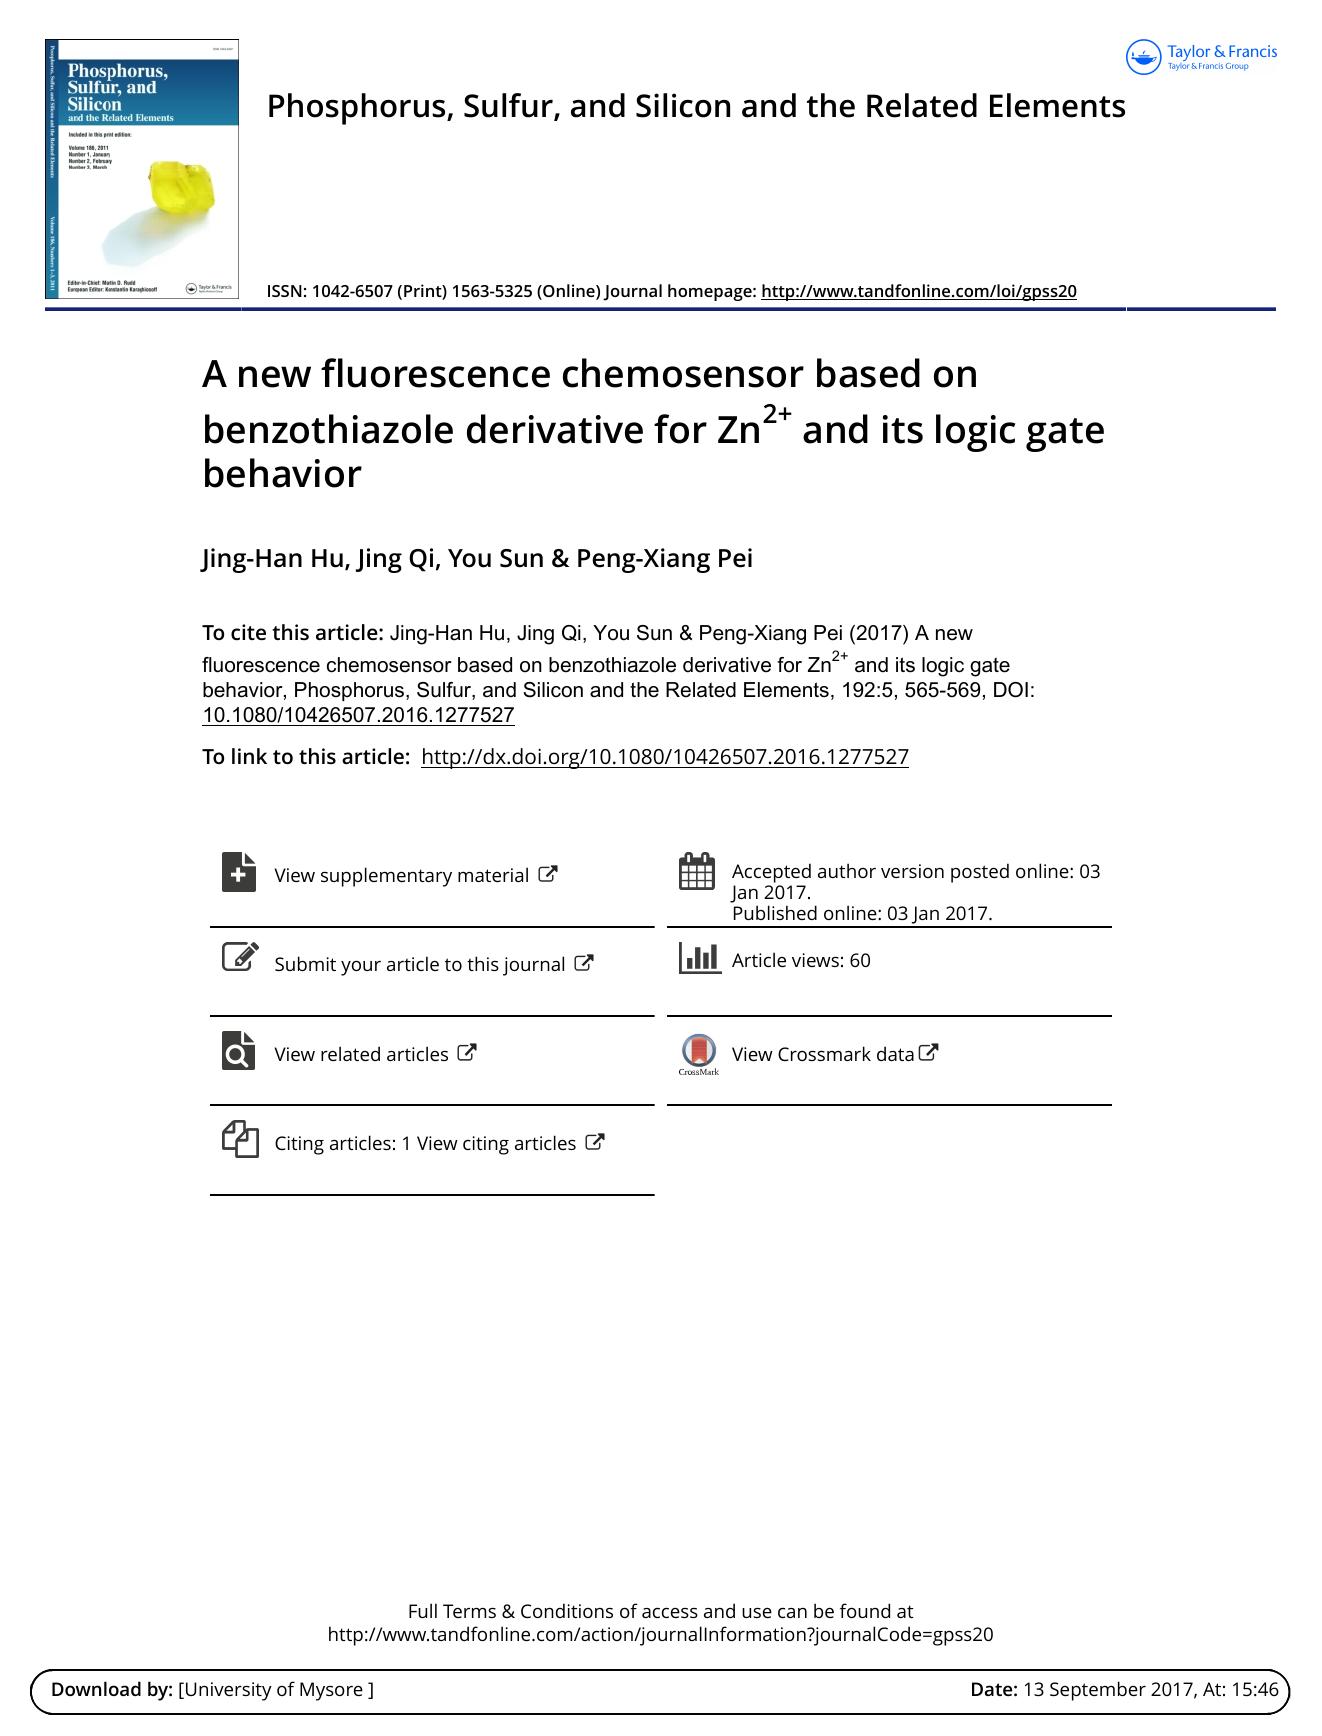 A new fluorescence chemosensor based on benzothiazole derivative for Zn2+ and its logic gate behavior by Jing-Han Hu & Jing Qi & You Sun & Peng-Xiang Pei